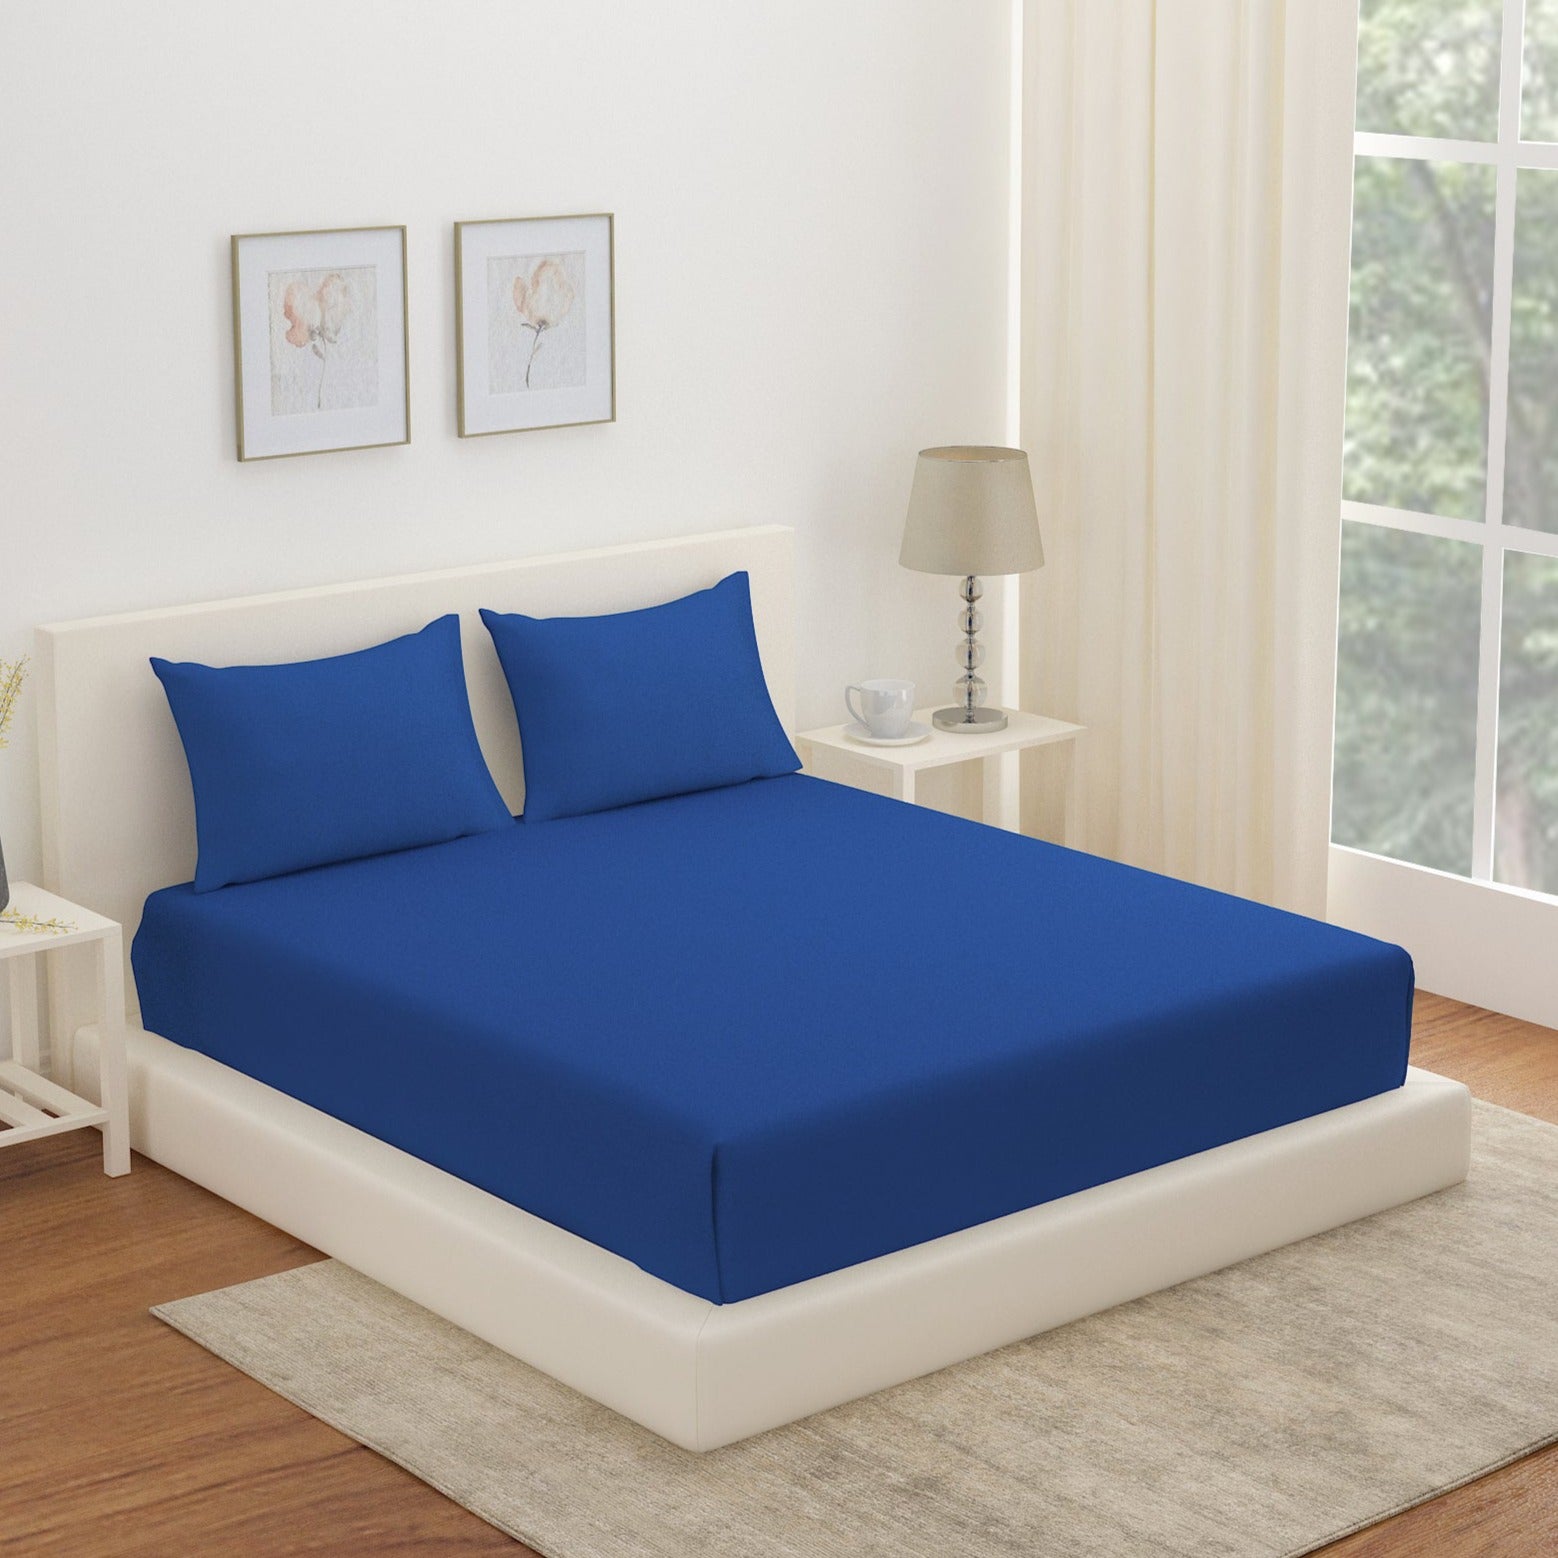 Bedding: Buy Bedding Sets Online @Best Price in India | Nilkamal Sleep